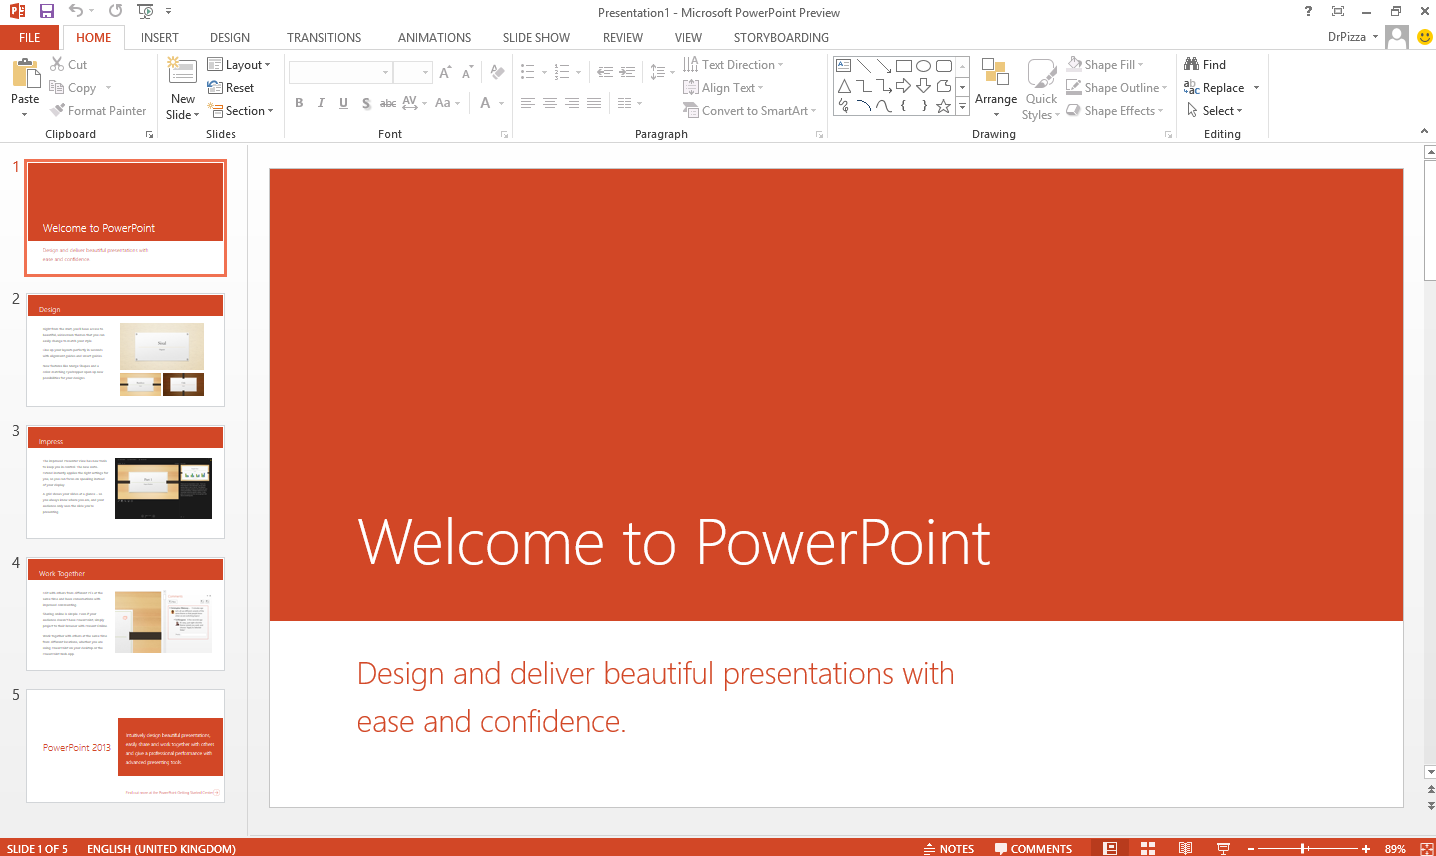 powerpoint 2013 presentation topic